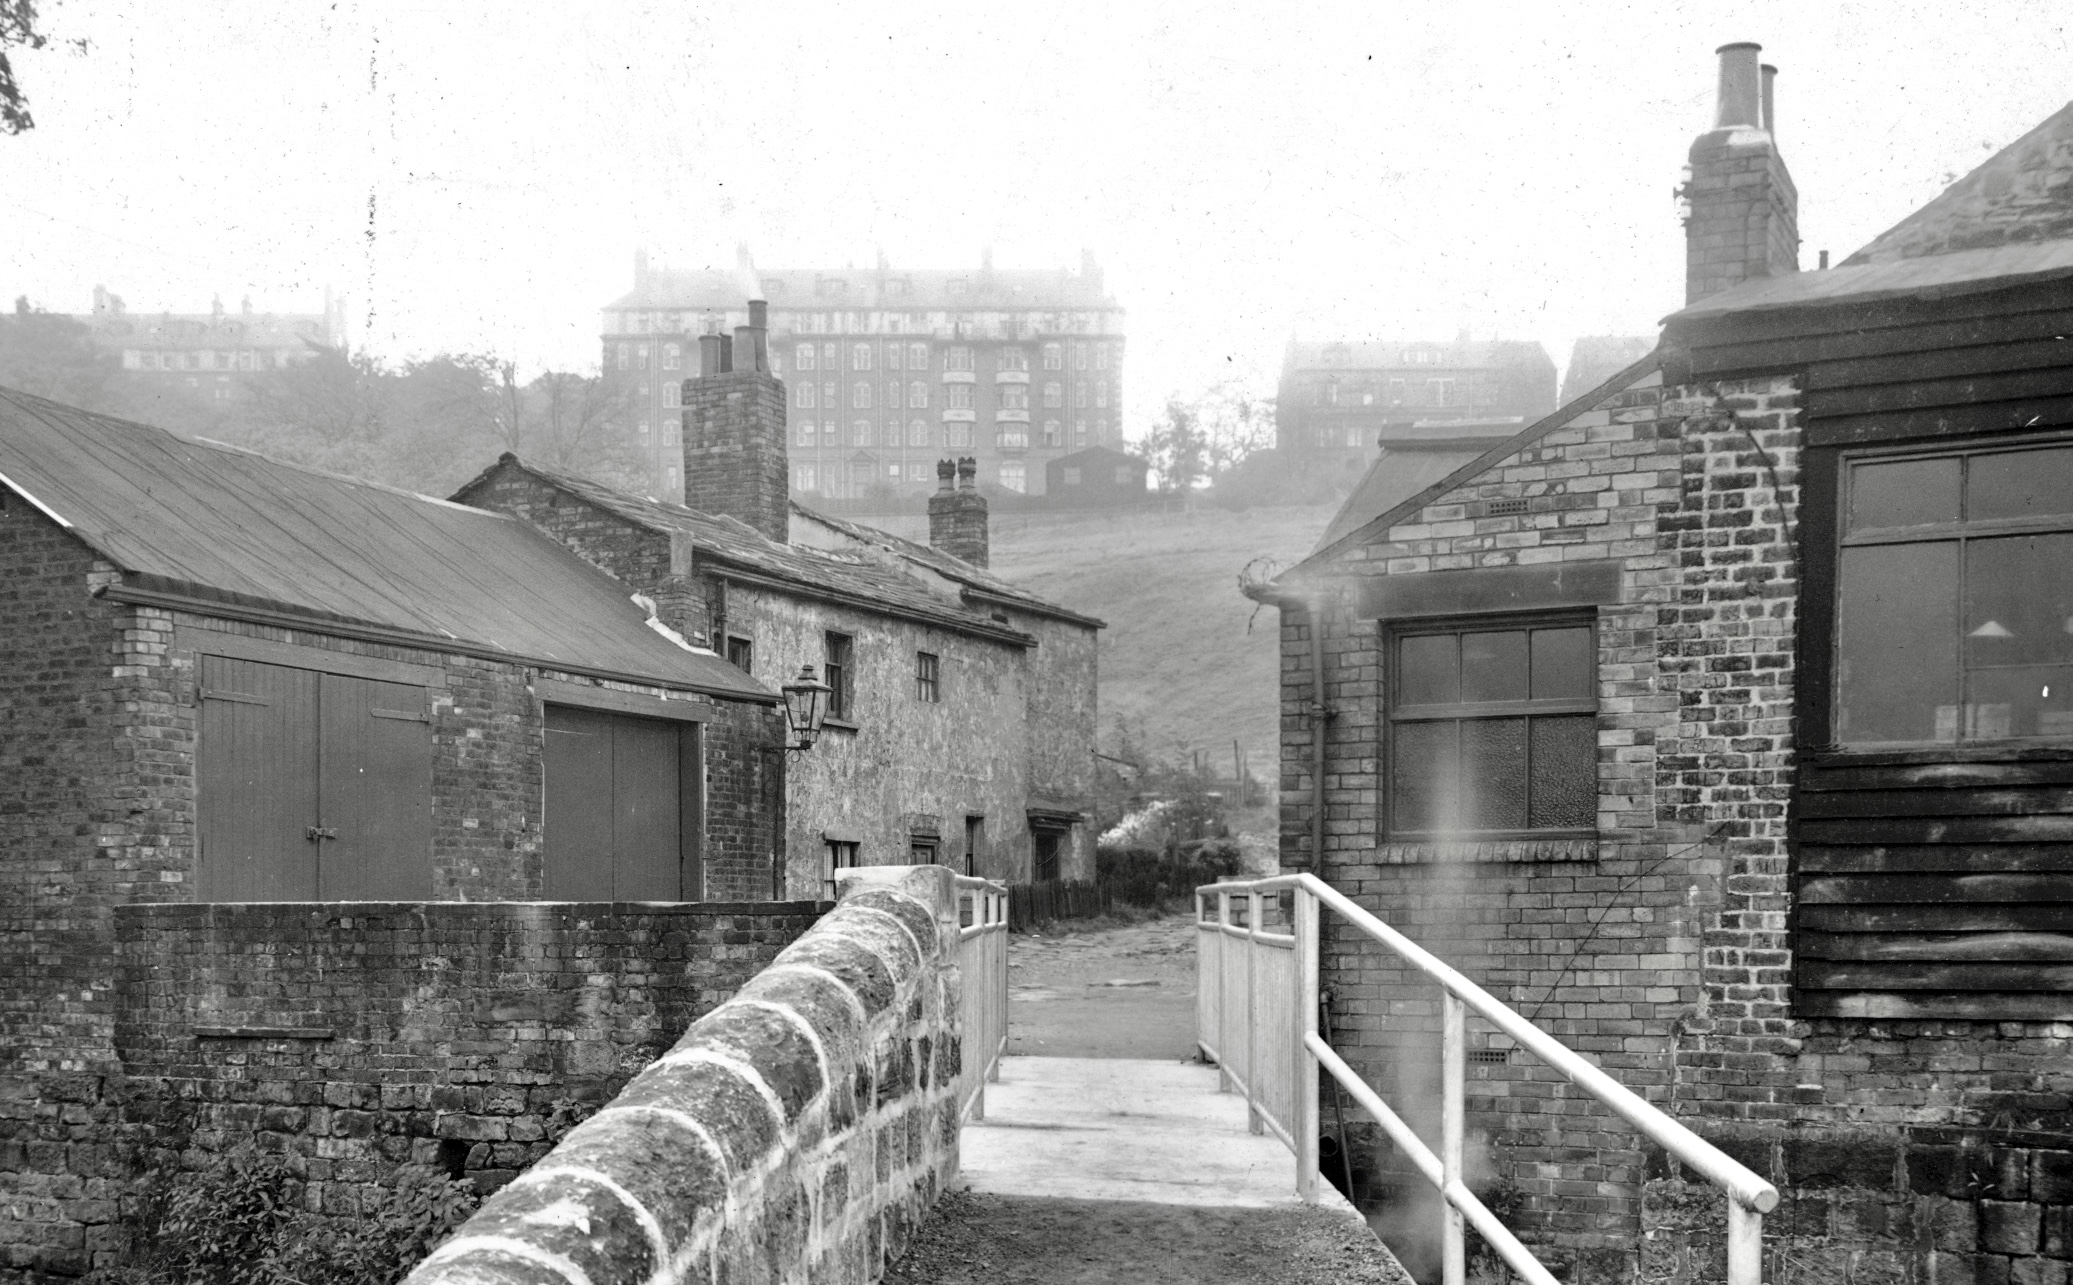 Woodland Dye Works [demolished], below Grange Court, 1950